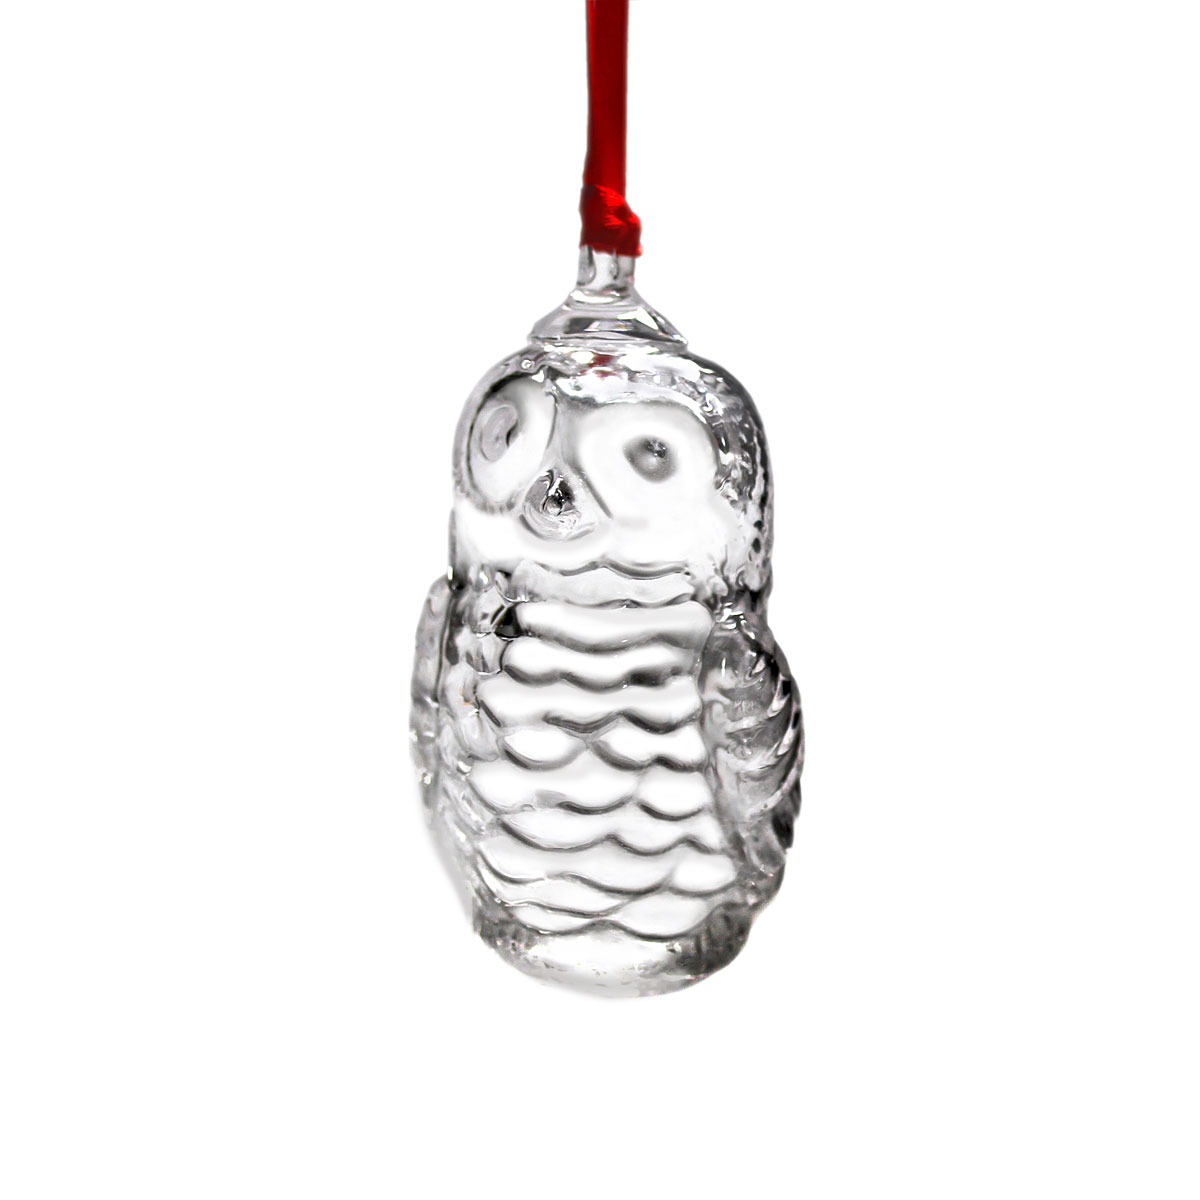 Steuben Snowy Owl Ornament